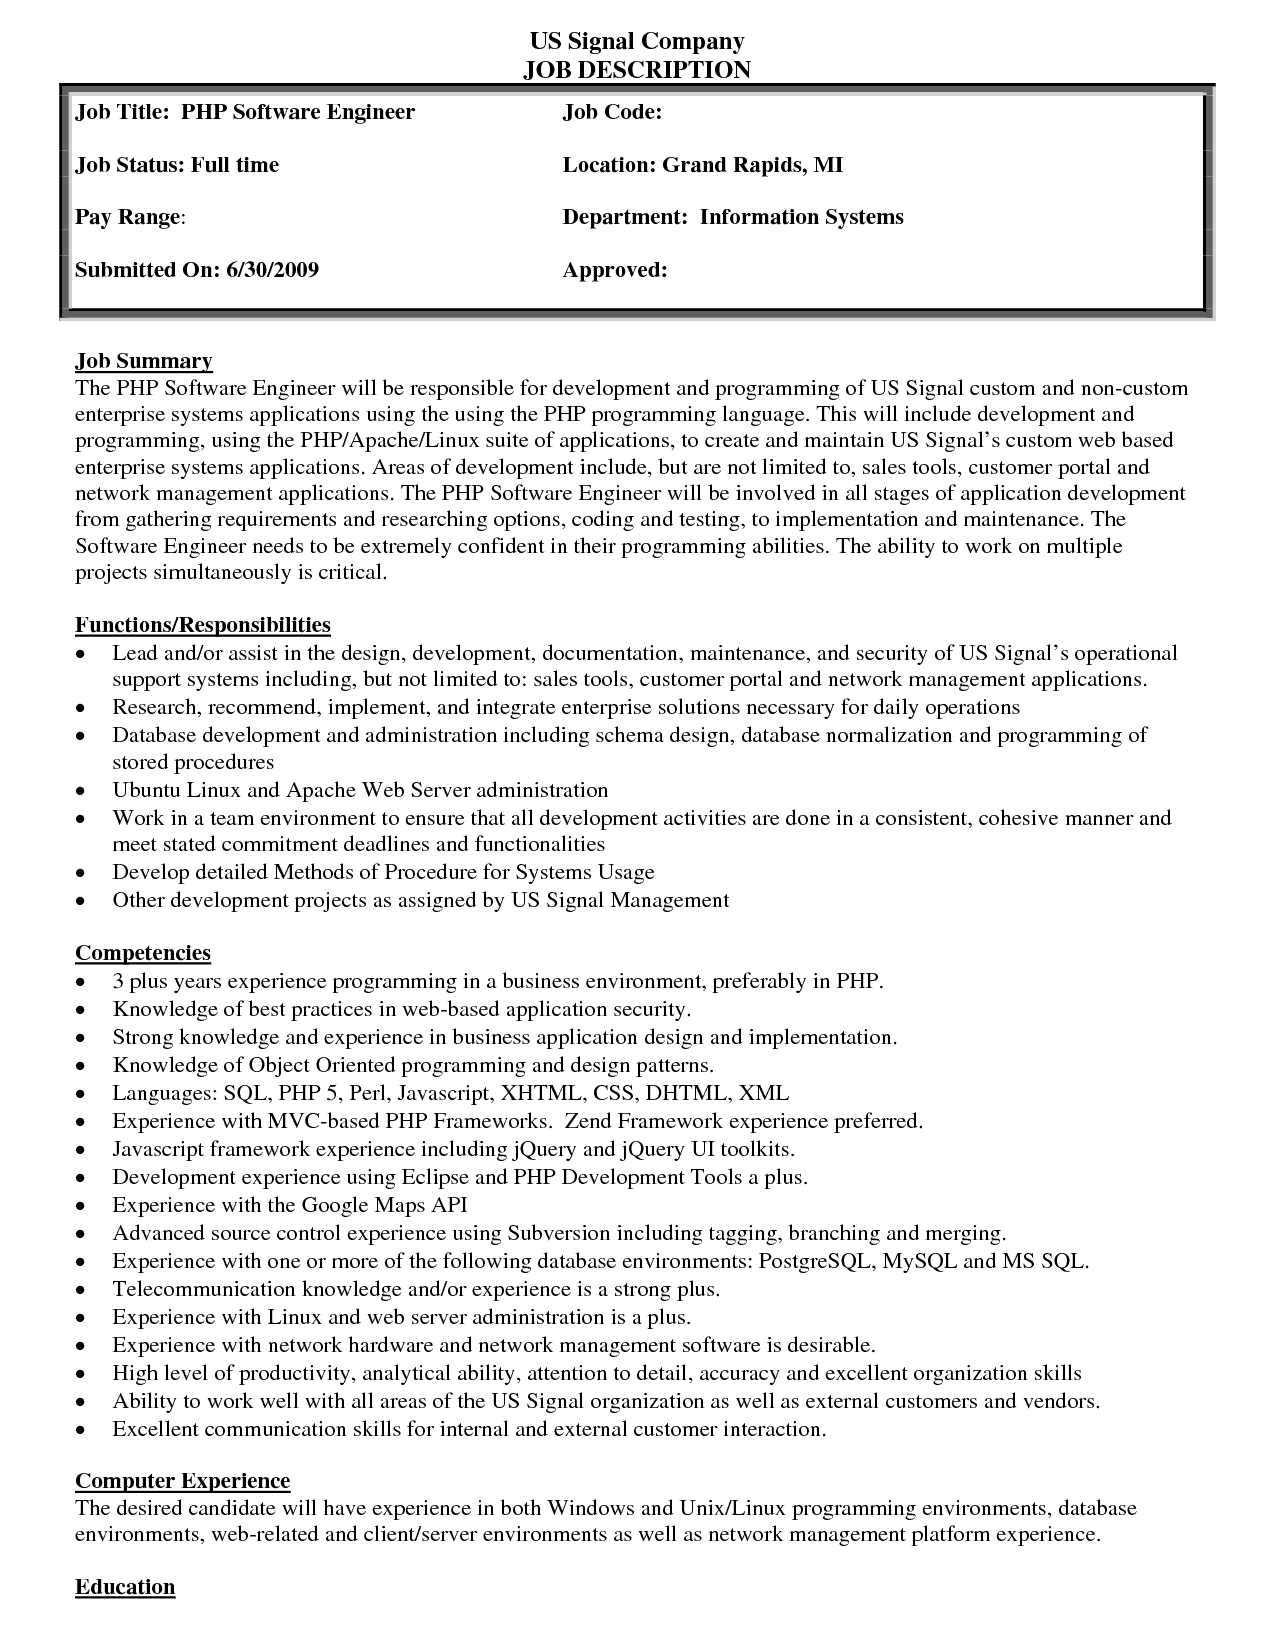 job description template resume